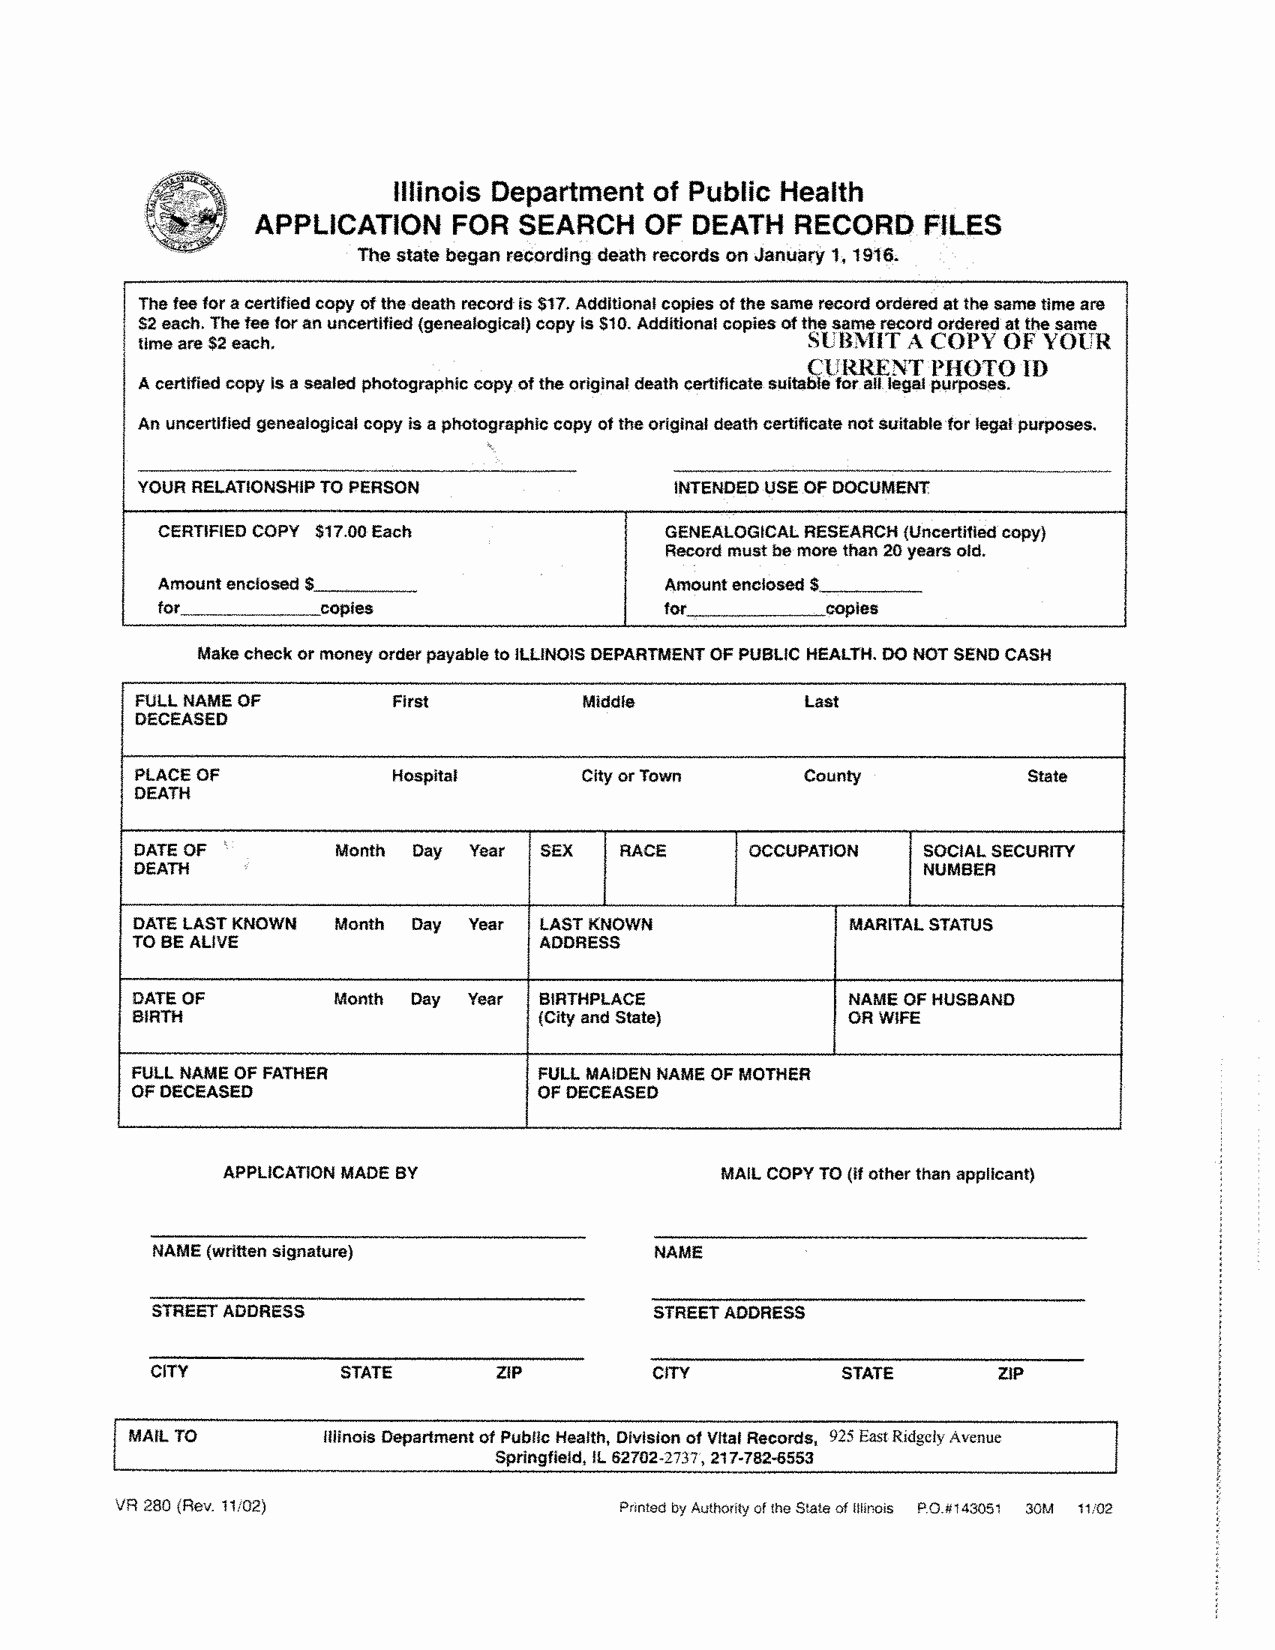 Florida Death Certificate Sample Best Of Sample Death Certificate 2018 Death Certificate form